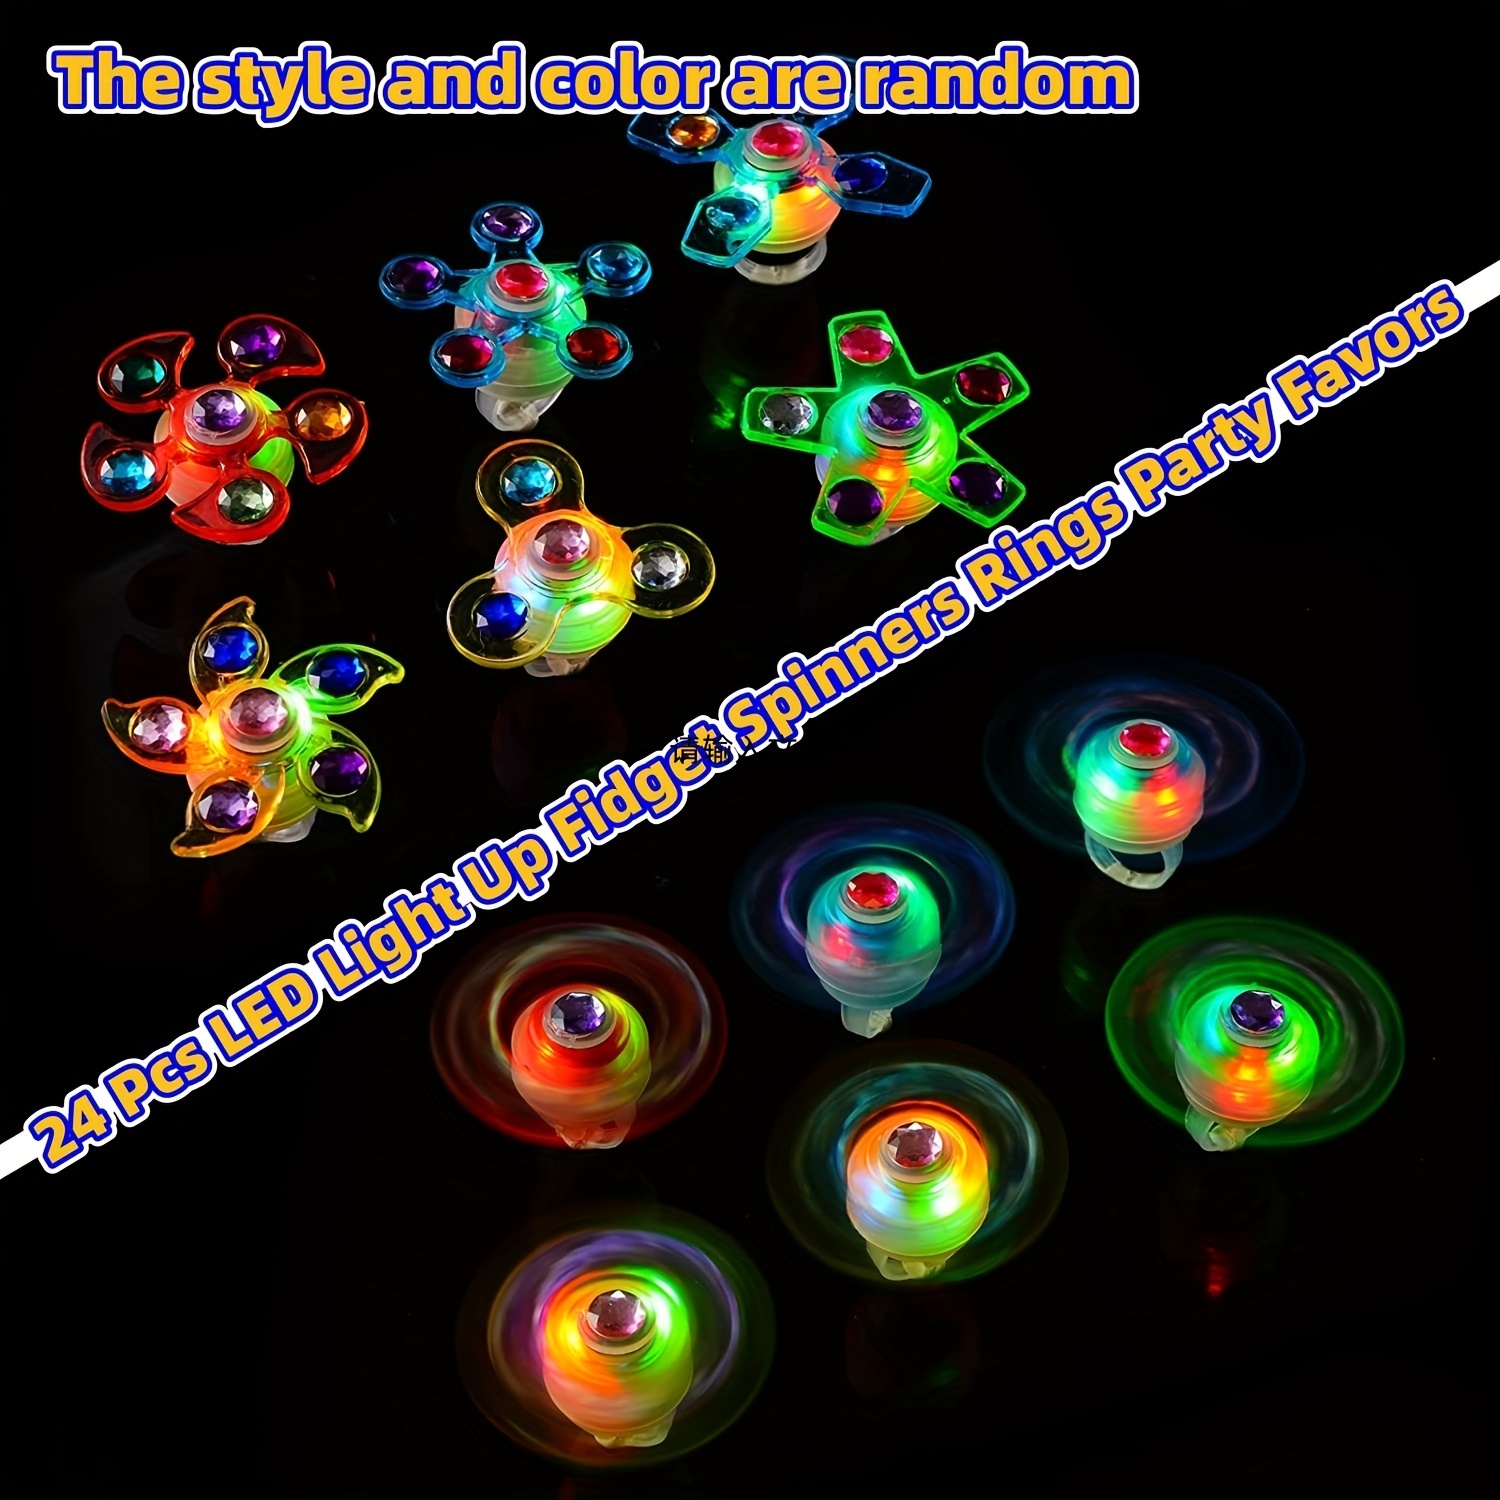 Shoous LED Light Fidget Spinner, Hand Top Spinners, Glow in Dark